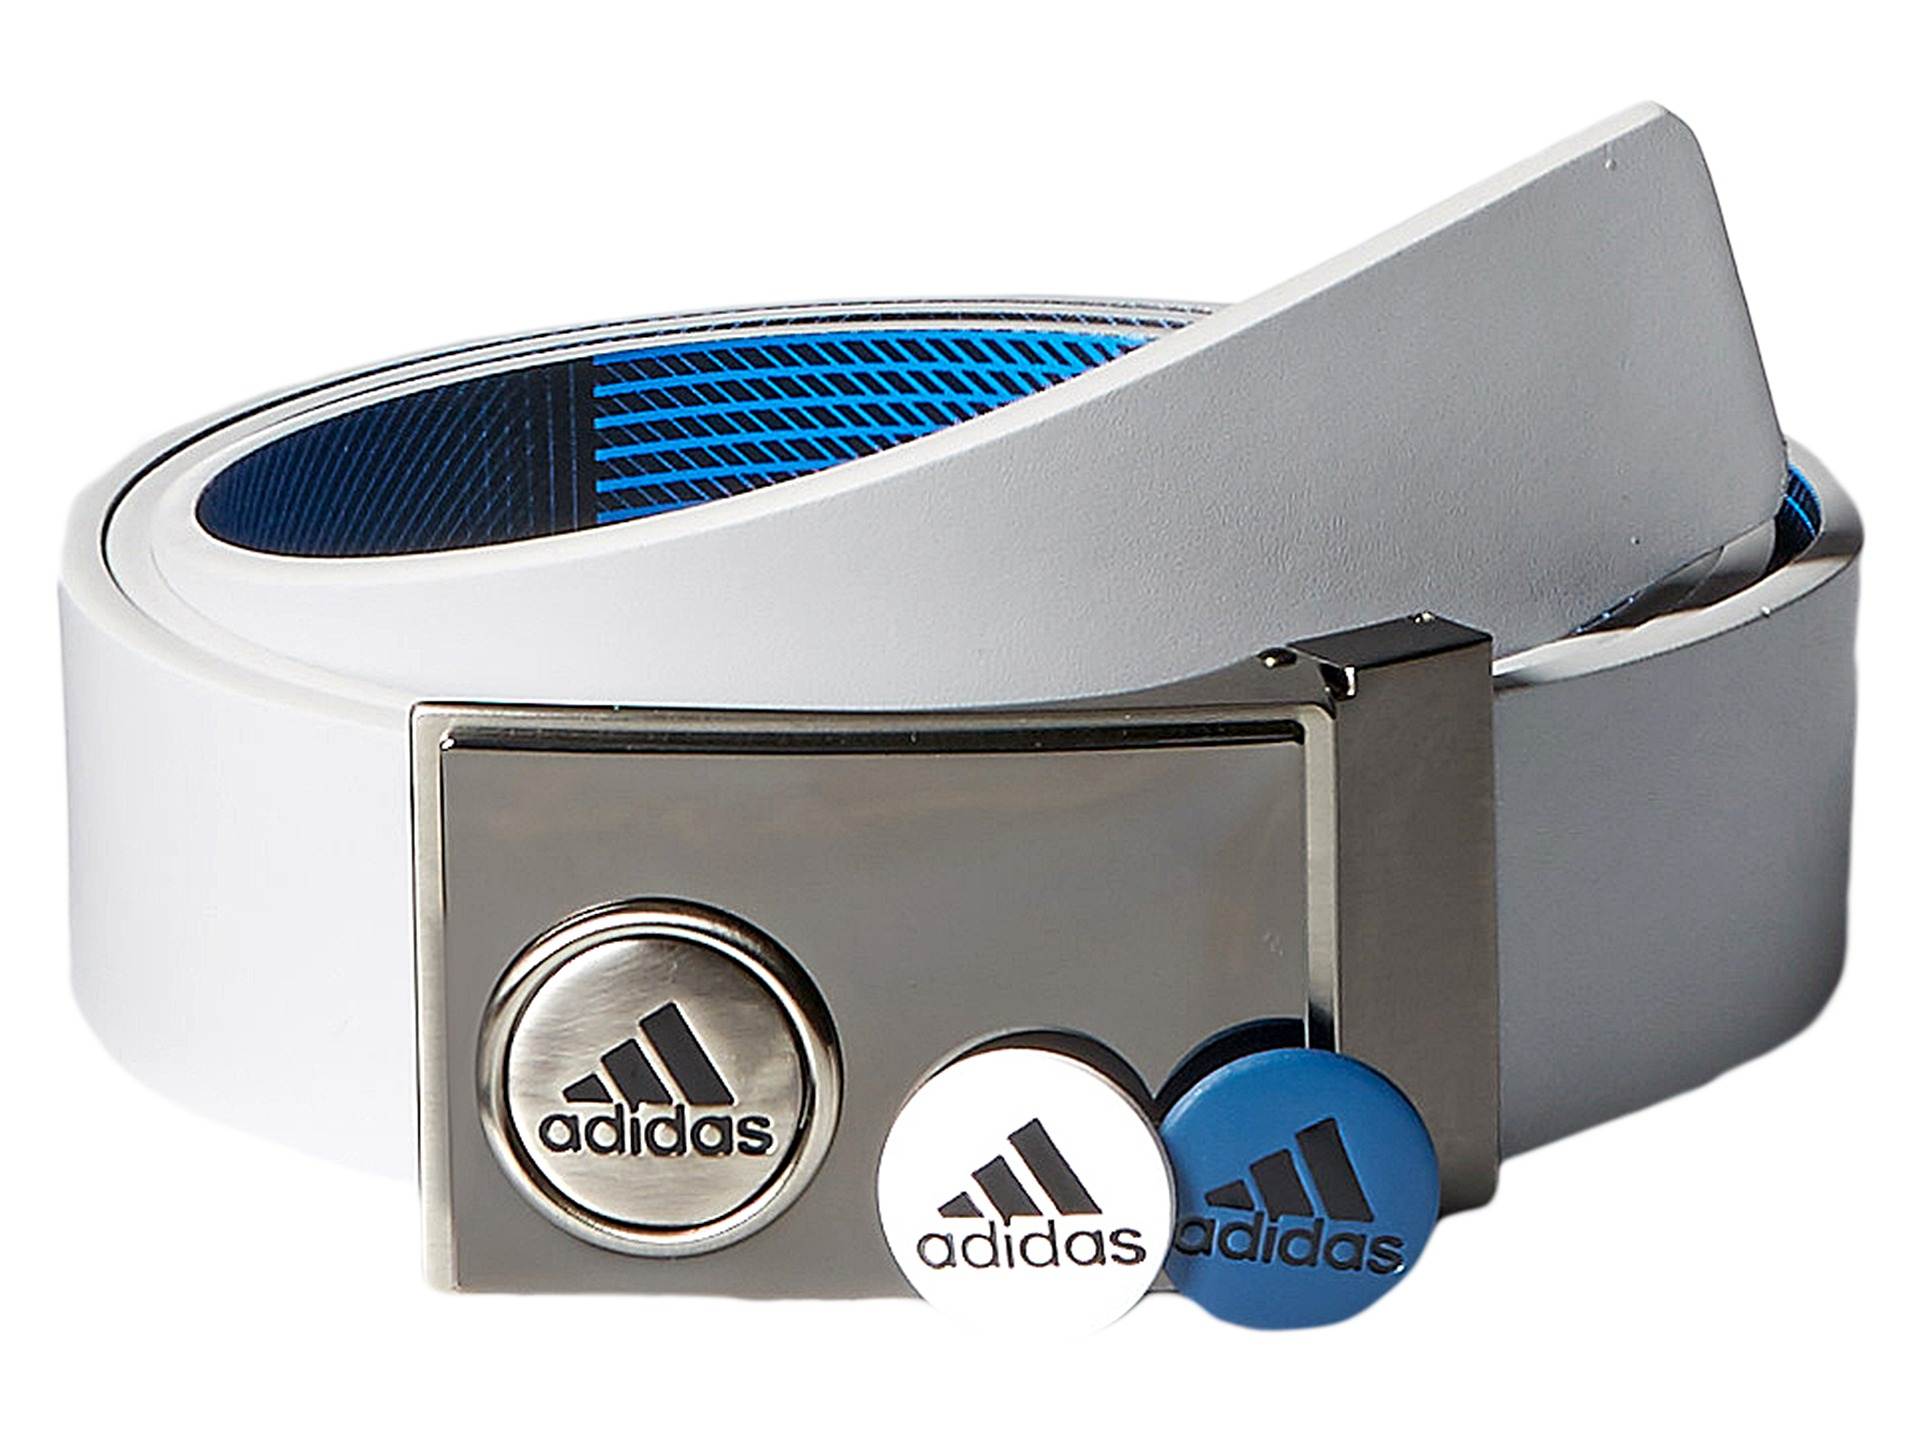 adidas Originals Leather Ball Marker Printed Belt in Blue for Men - Lyst